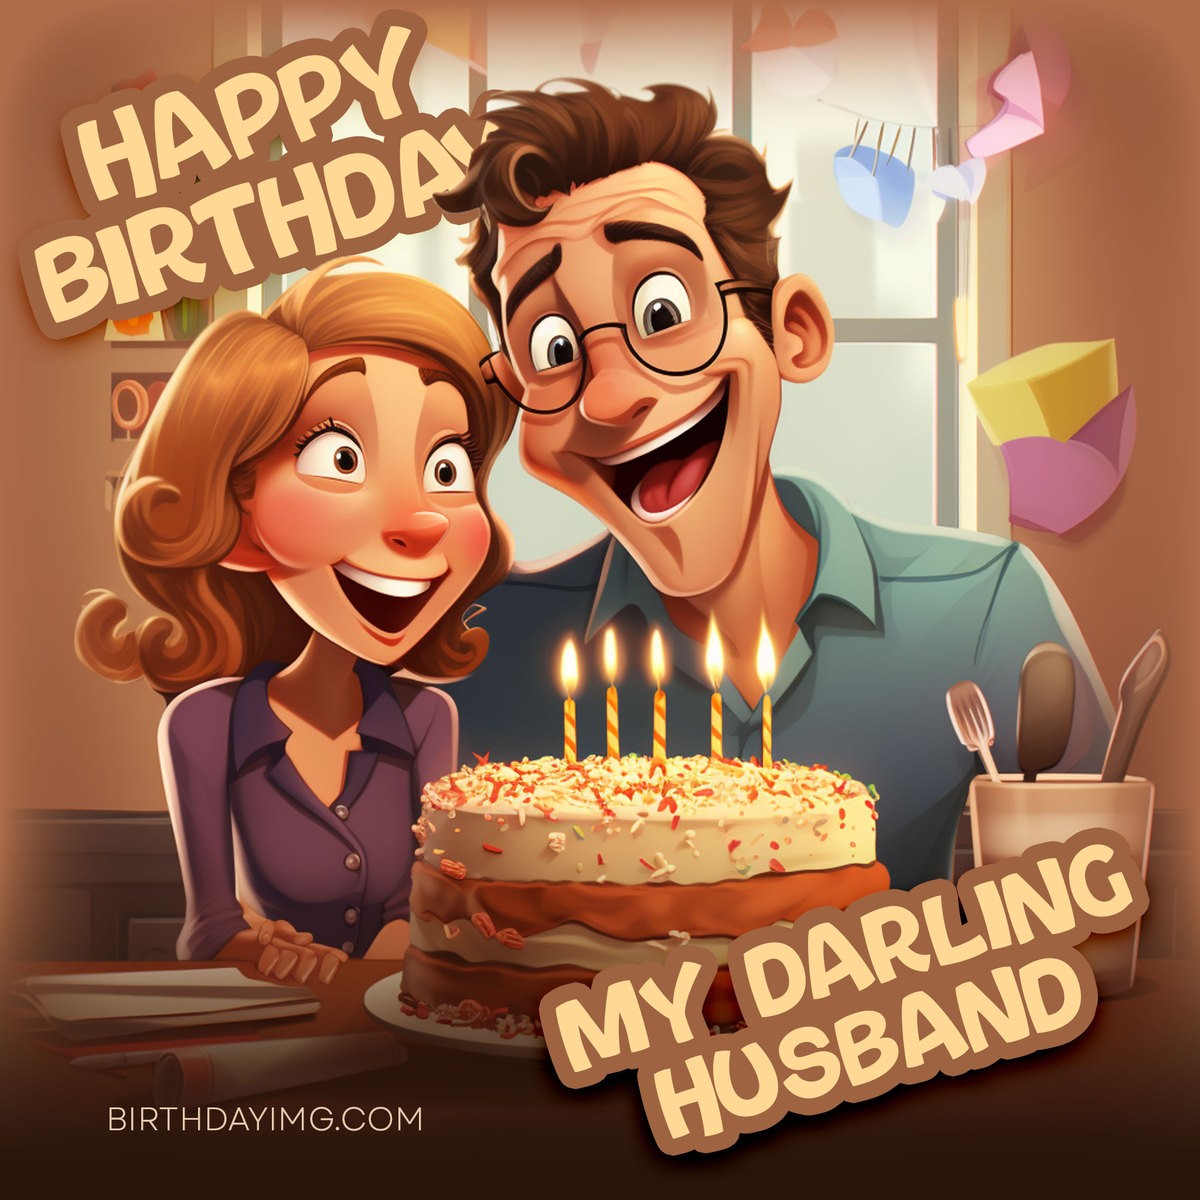 Free Happy Birthday Image for Dear Husband - birthdayimg.com